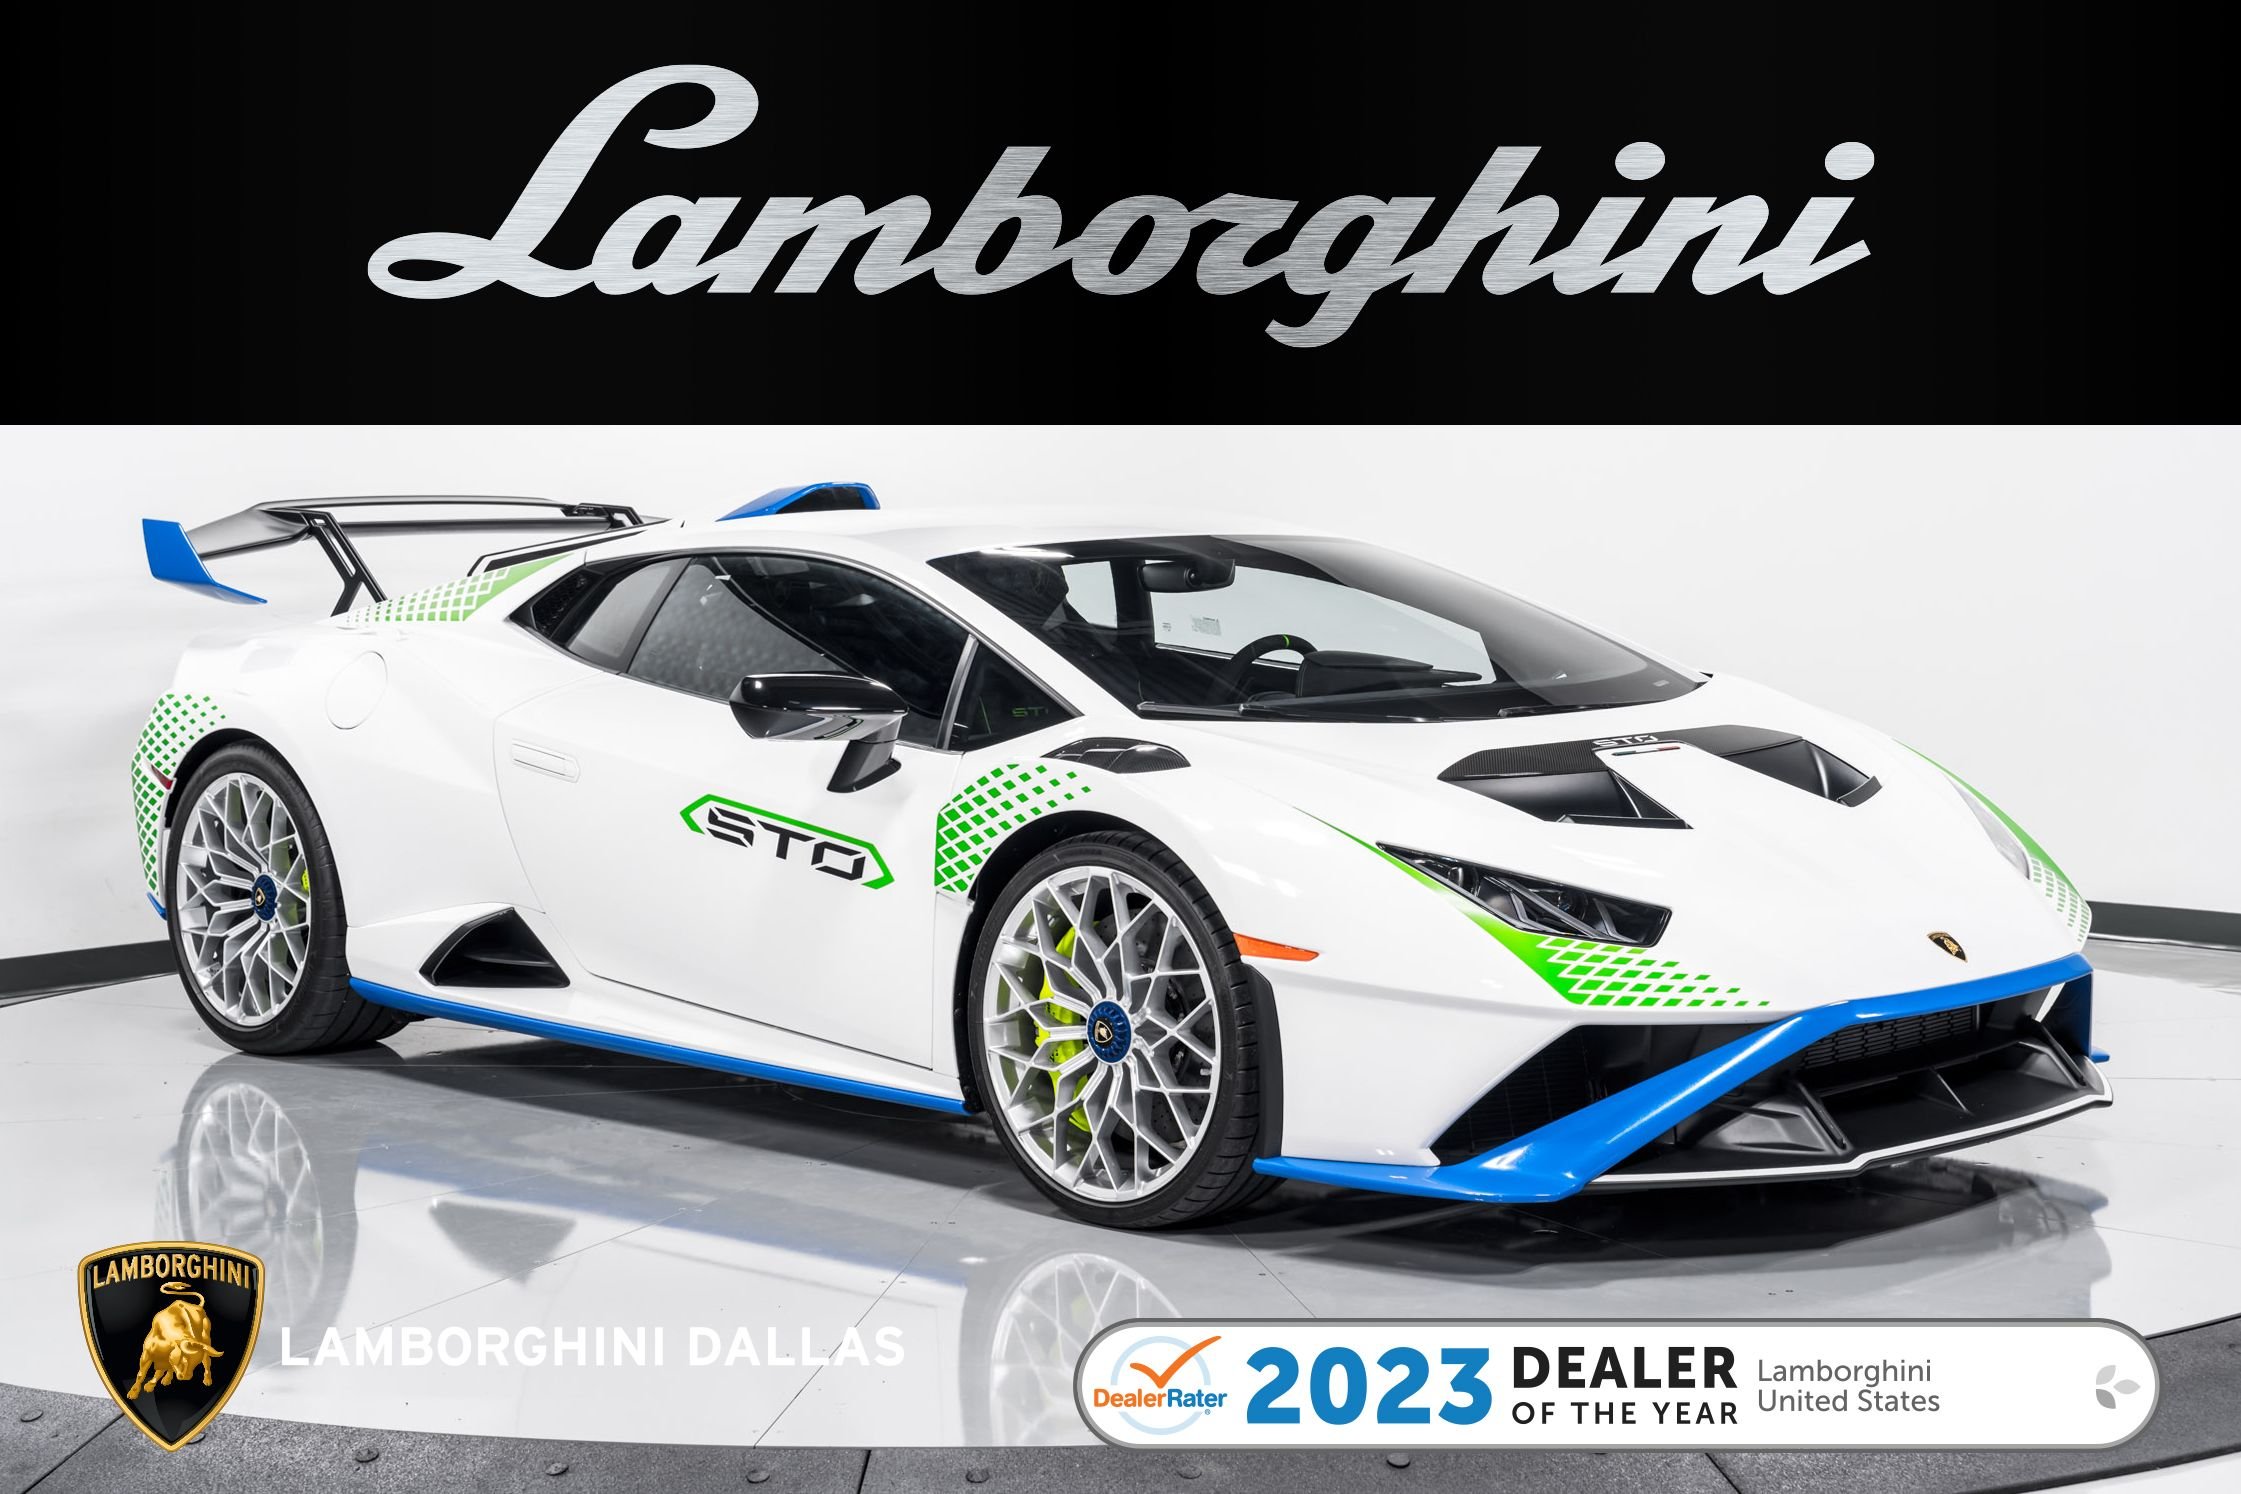 Used 2022 Lamborghini Huracan STO For Sale Richardson,TX | Stock 